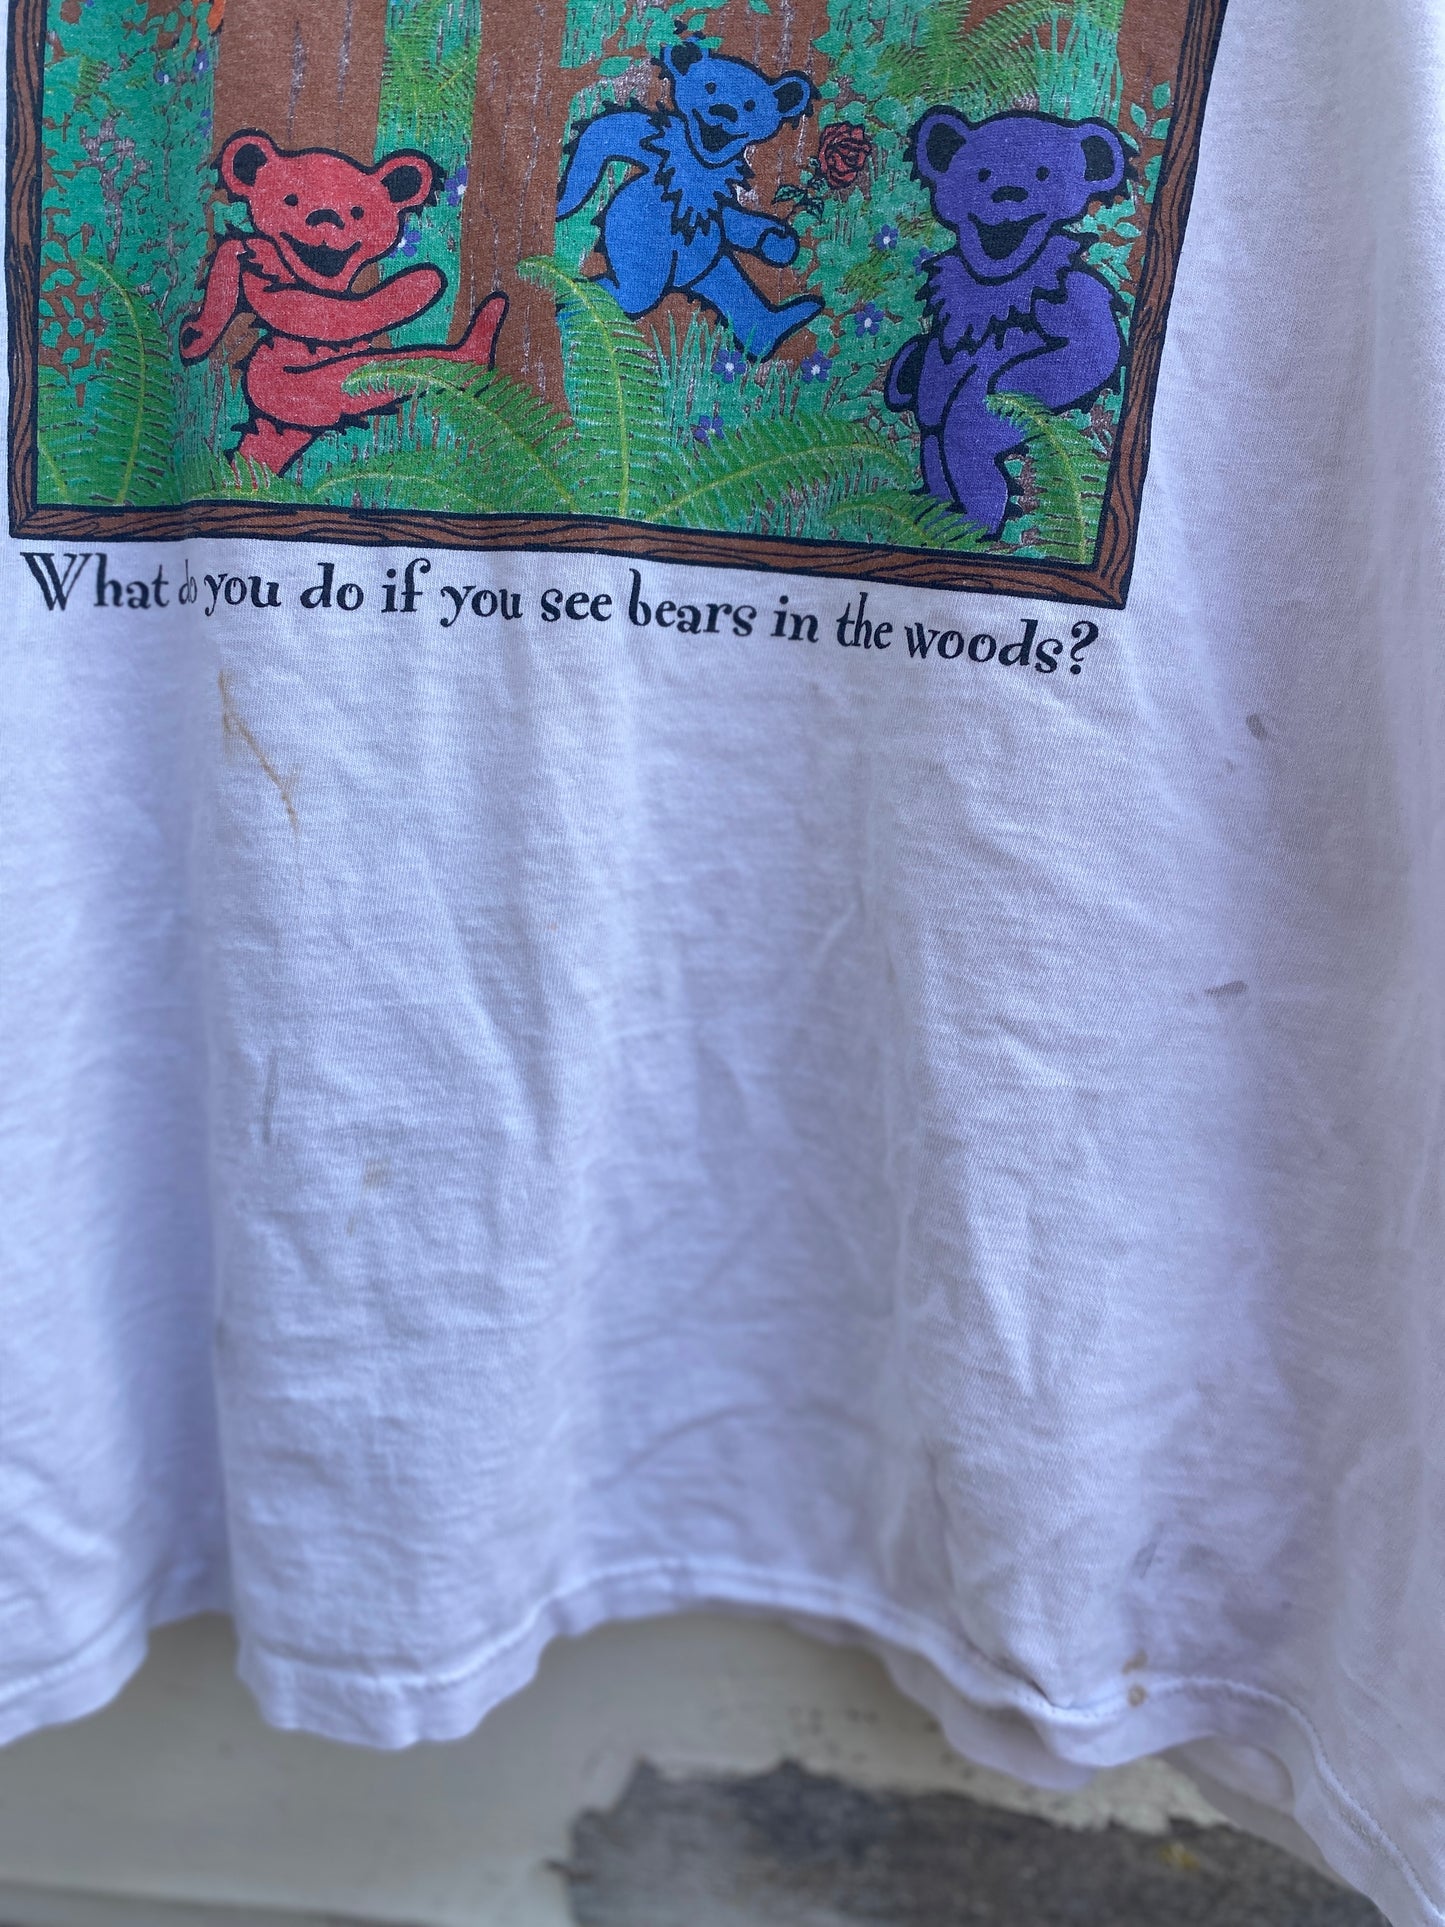 Vintage Grateful Dead Play Dead Tshirt XL